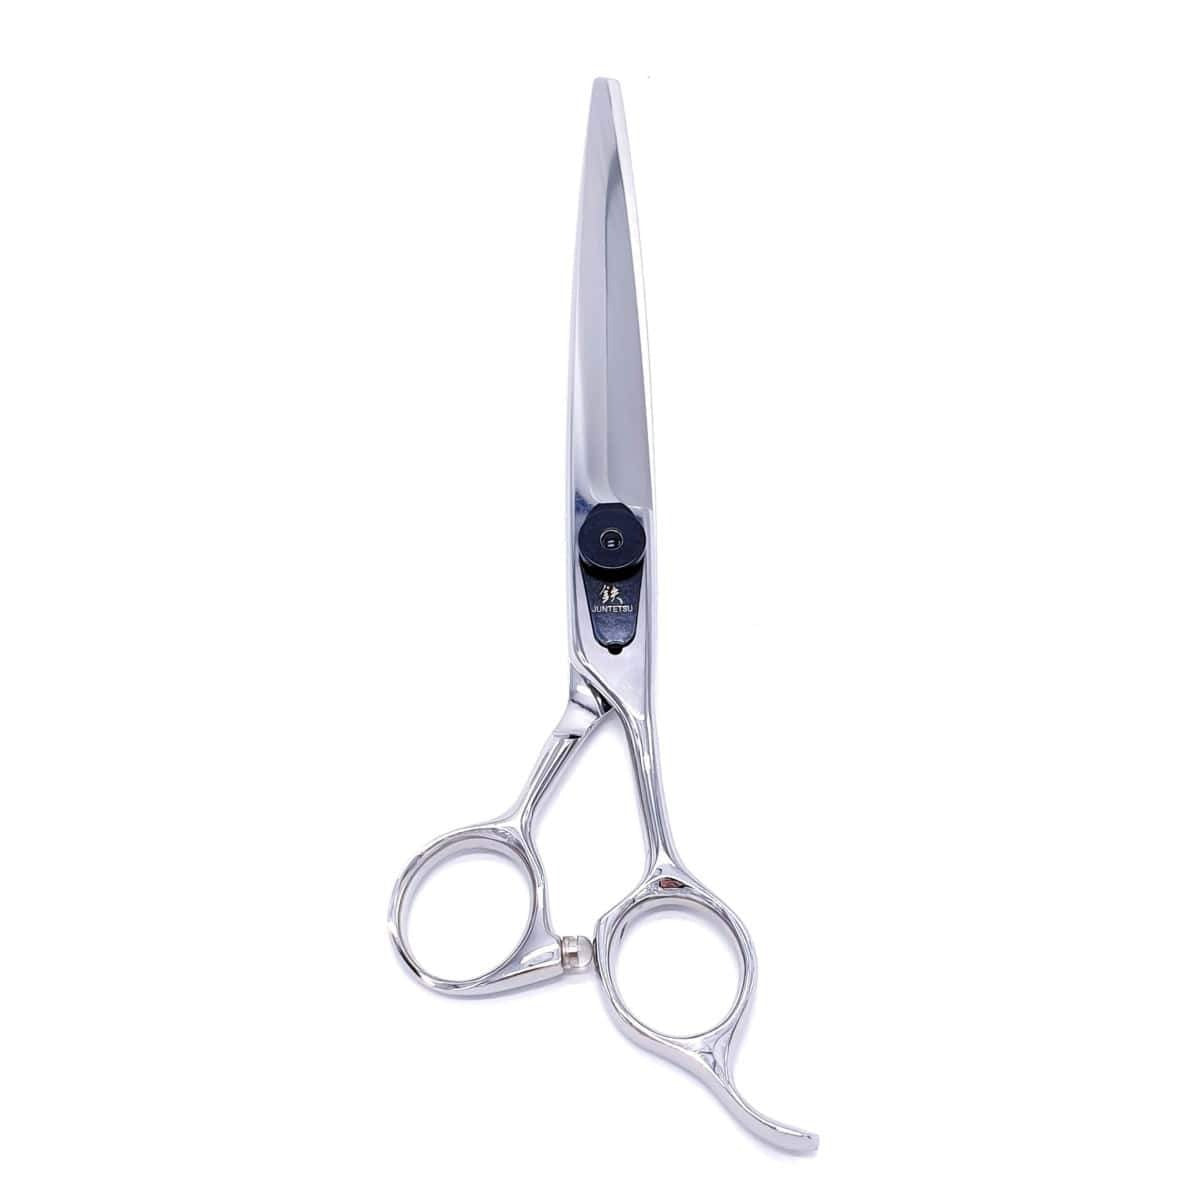 Juntetsu Cobalt Sword Hair Cutting Scissors - Japan Scissors USA